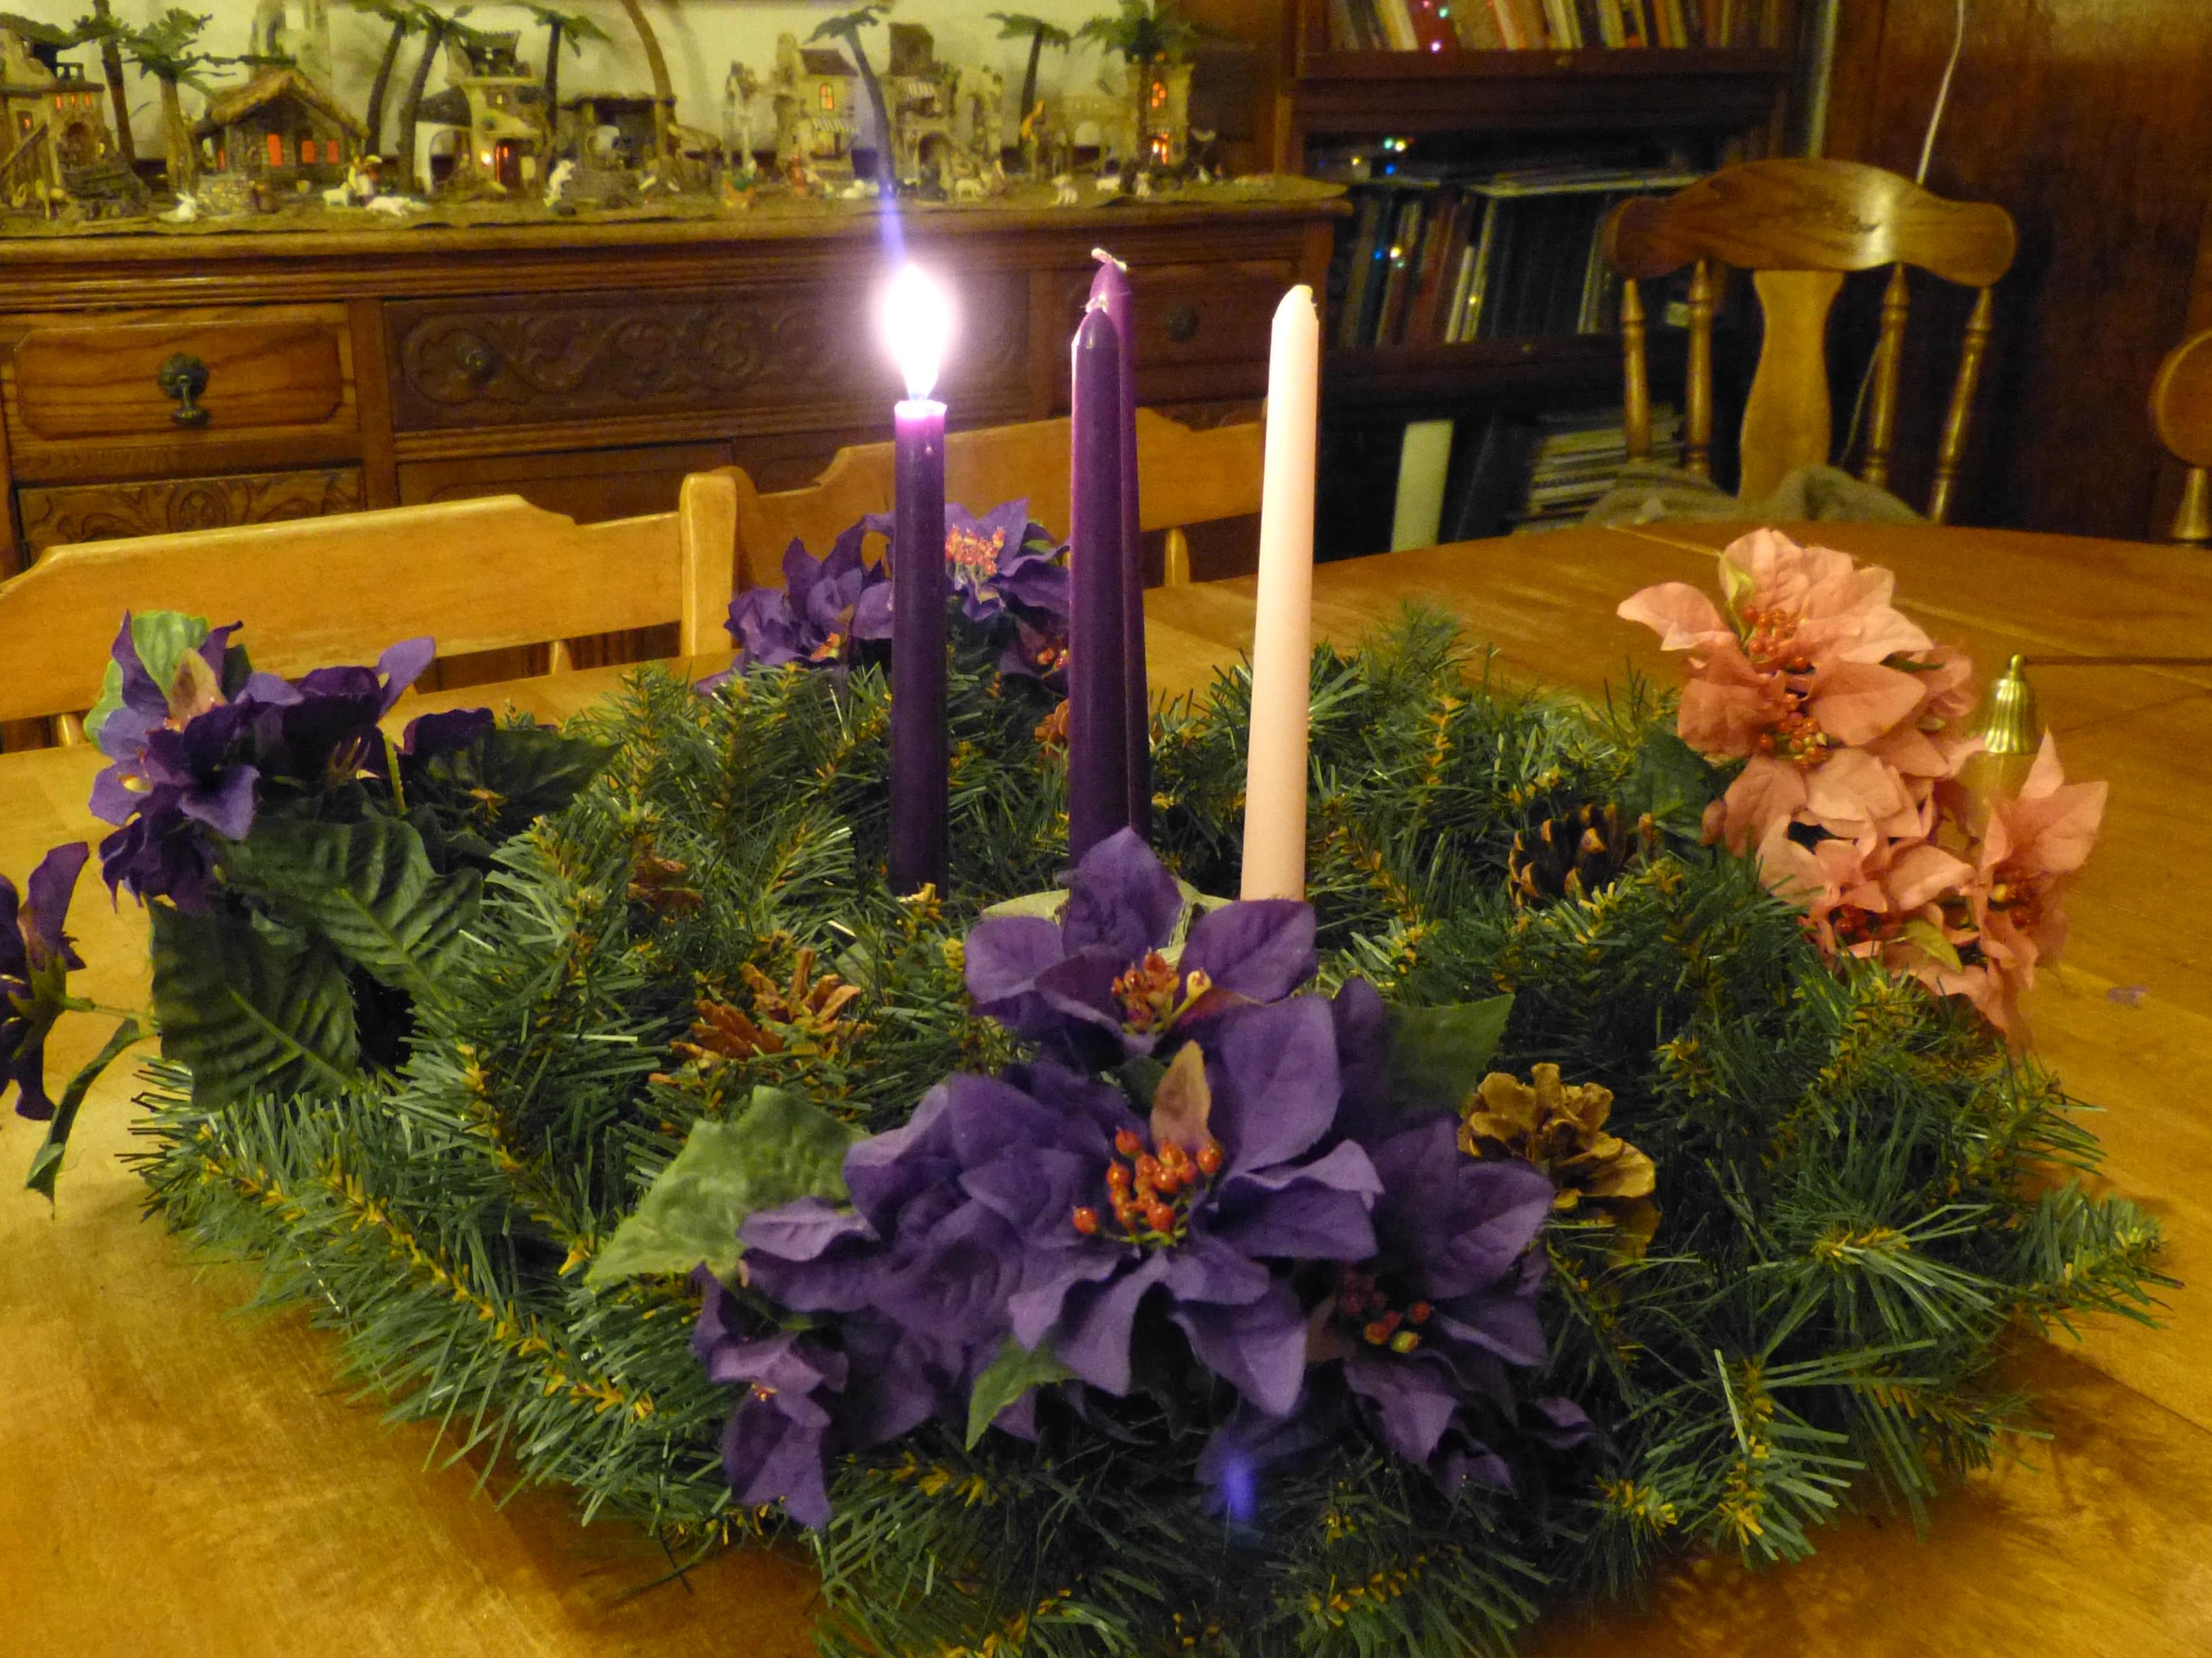 advent decorations catholic